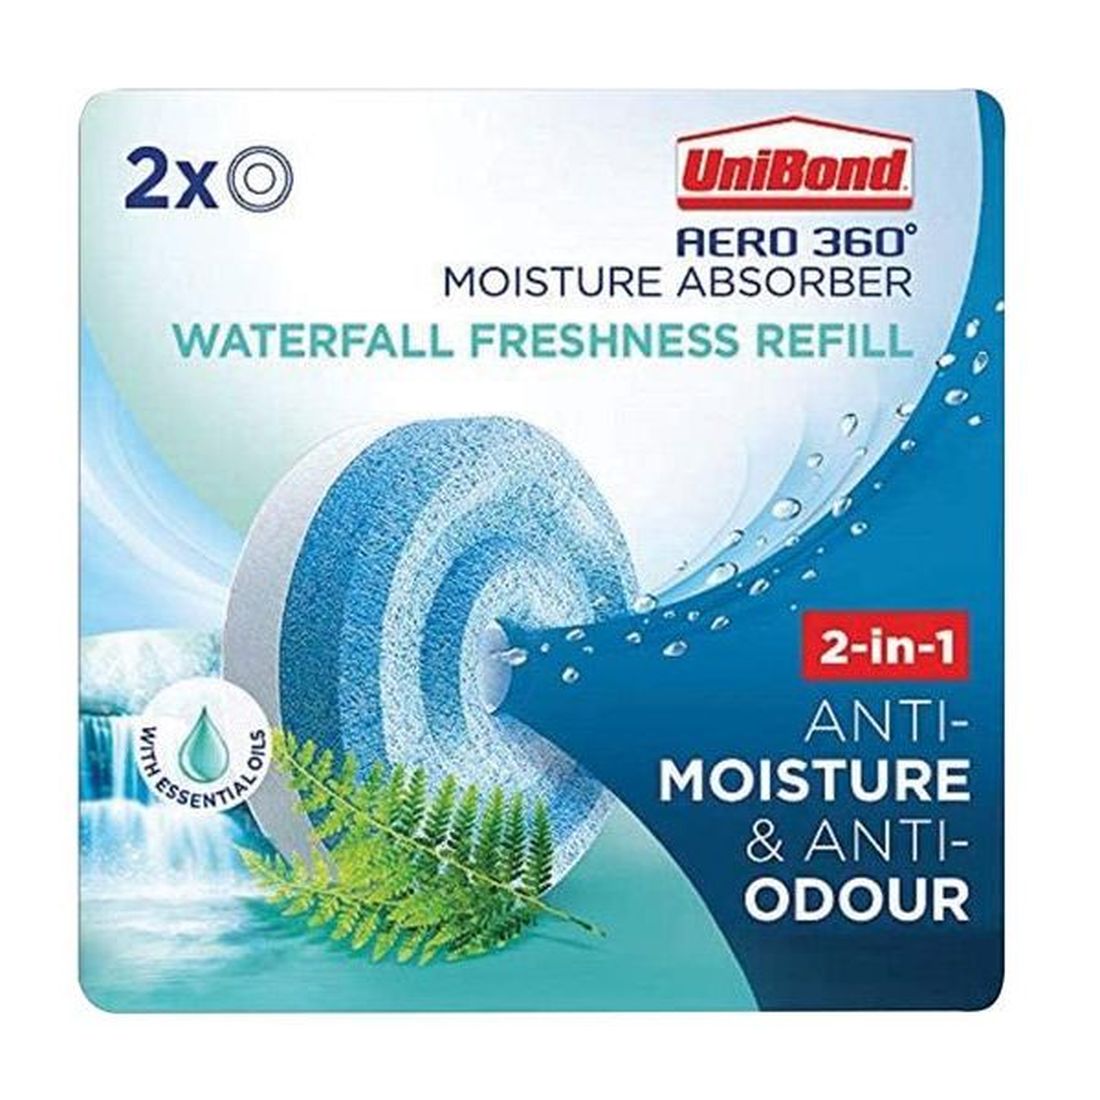 UniBond Aero 360 Moisture Absorber Waterfall Freshness Refill (Pack 2)                  